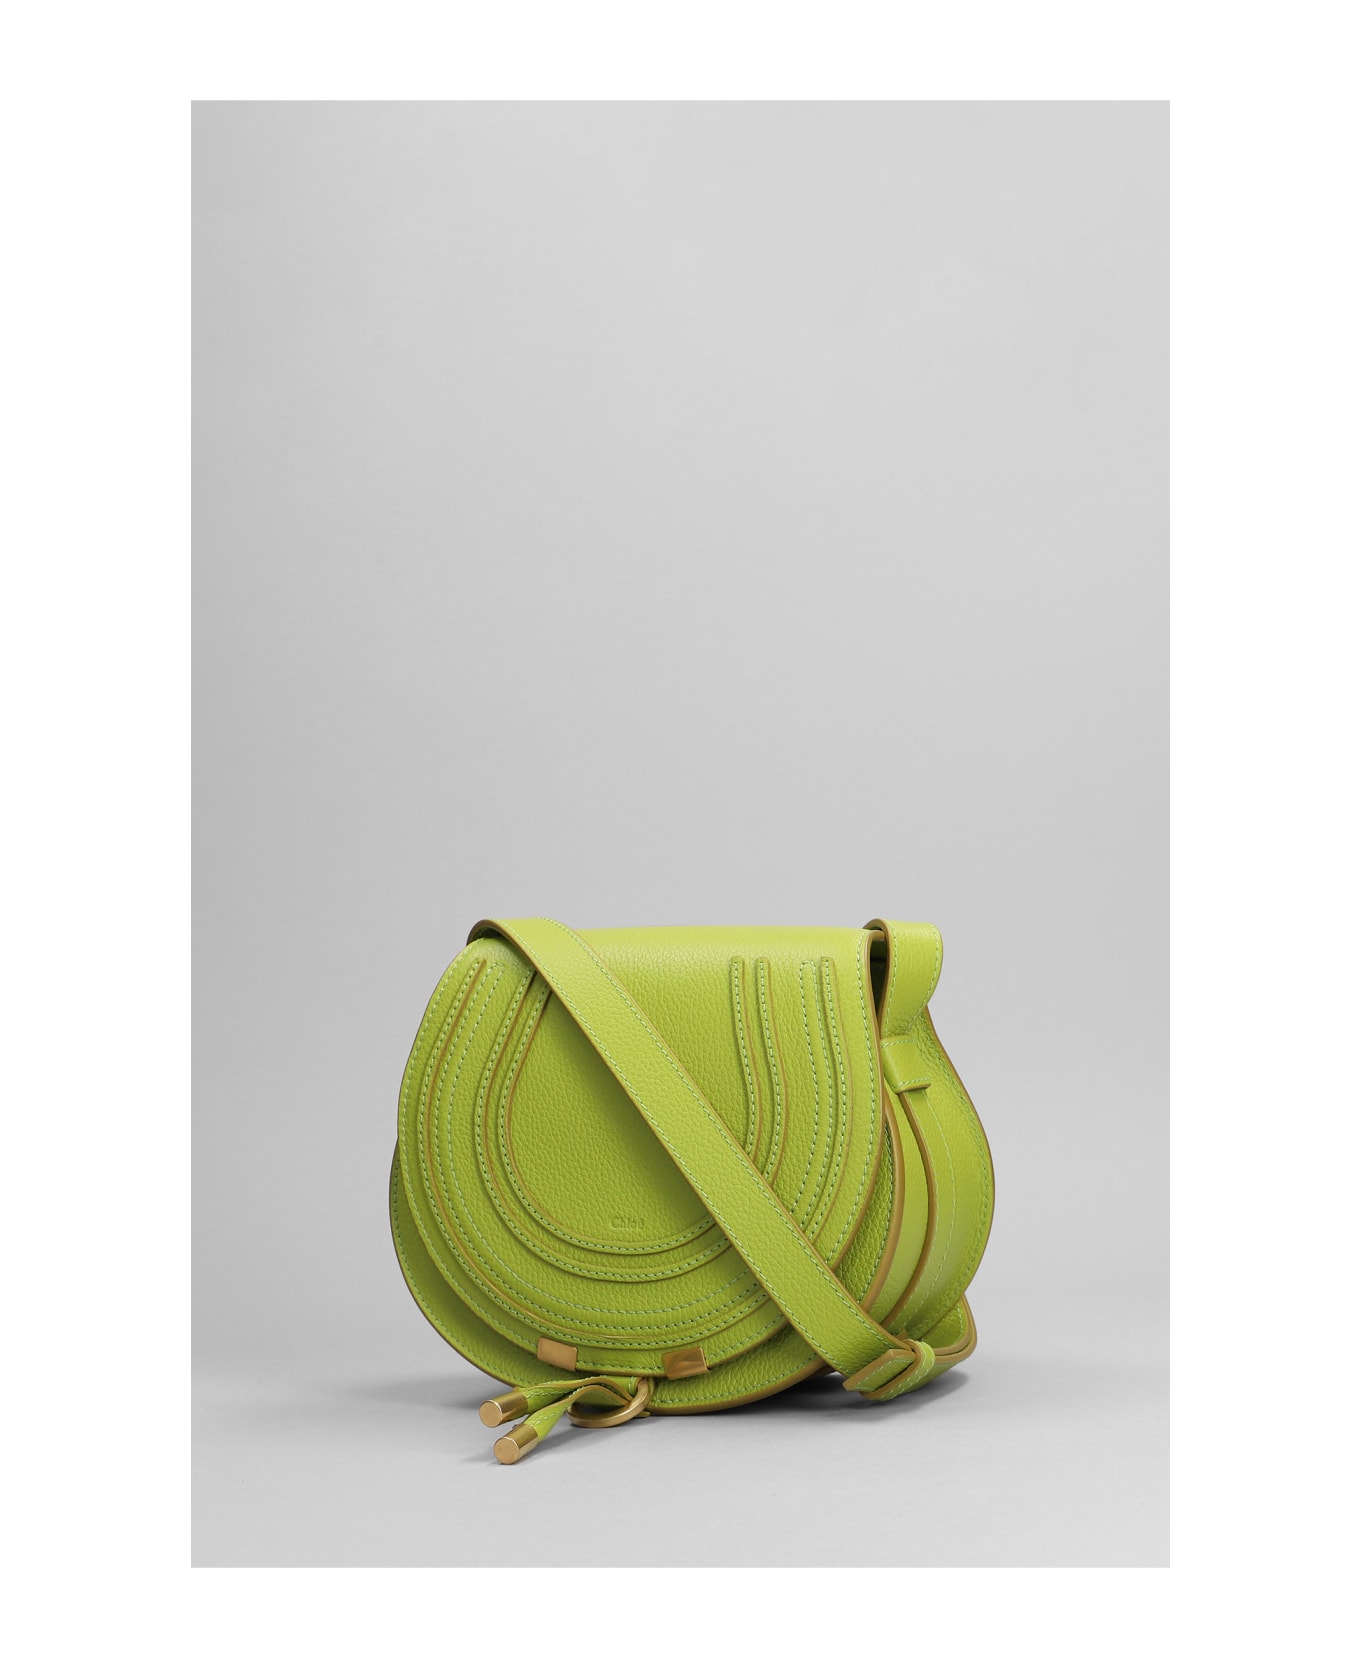 Chloé Marcie Shoulder Bag In Green Leather - green